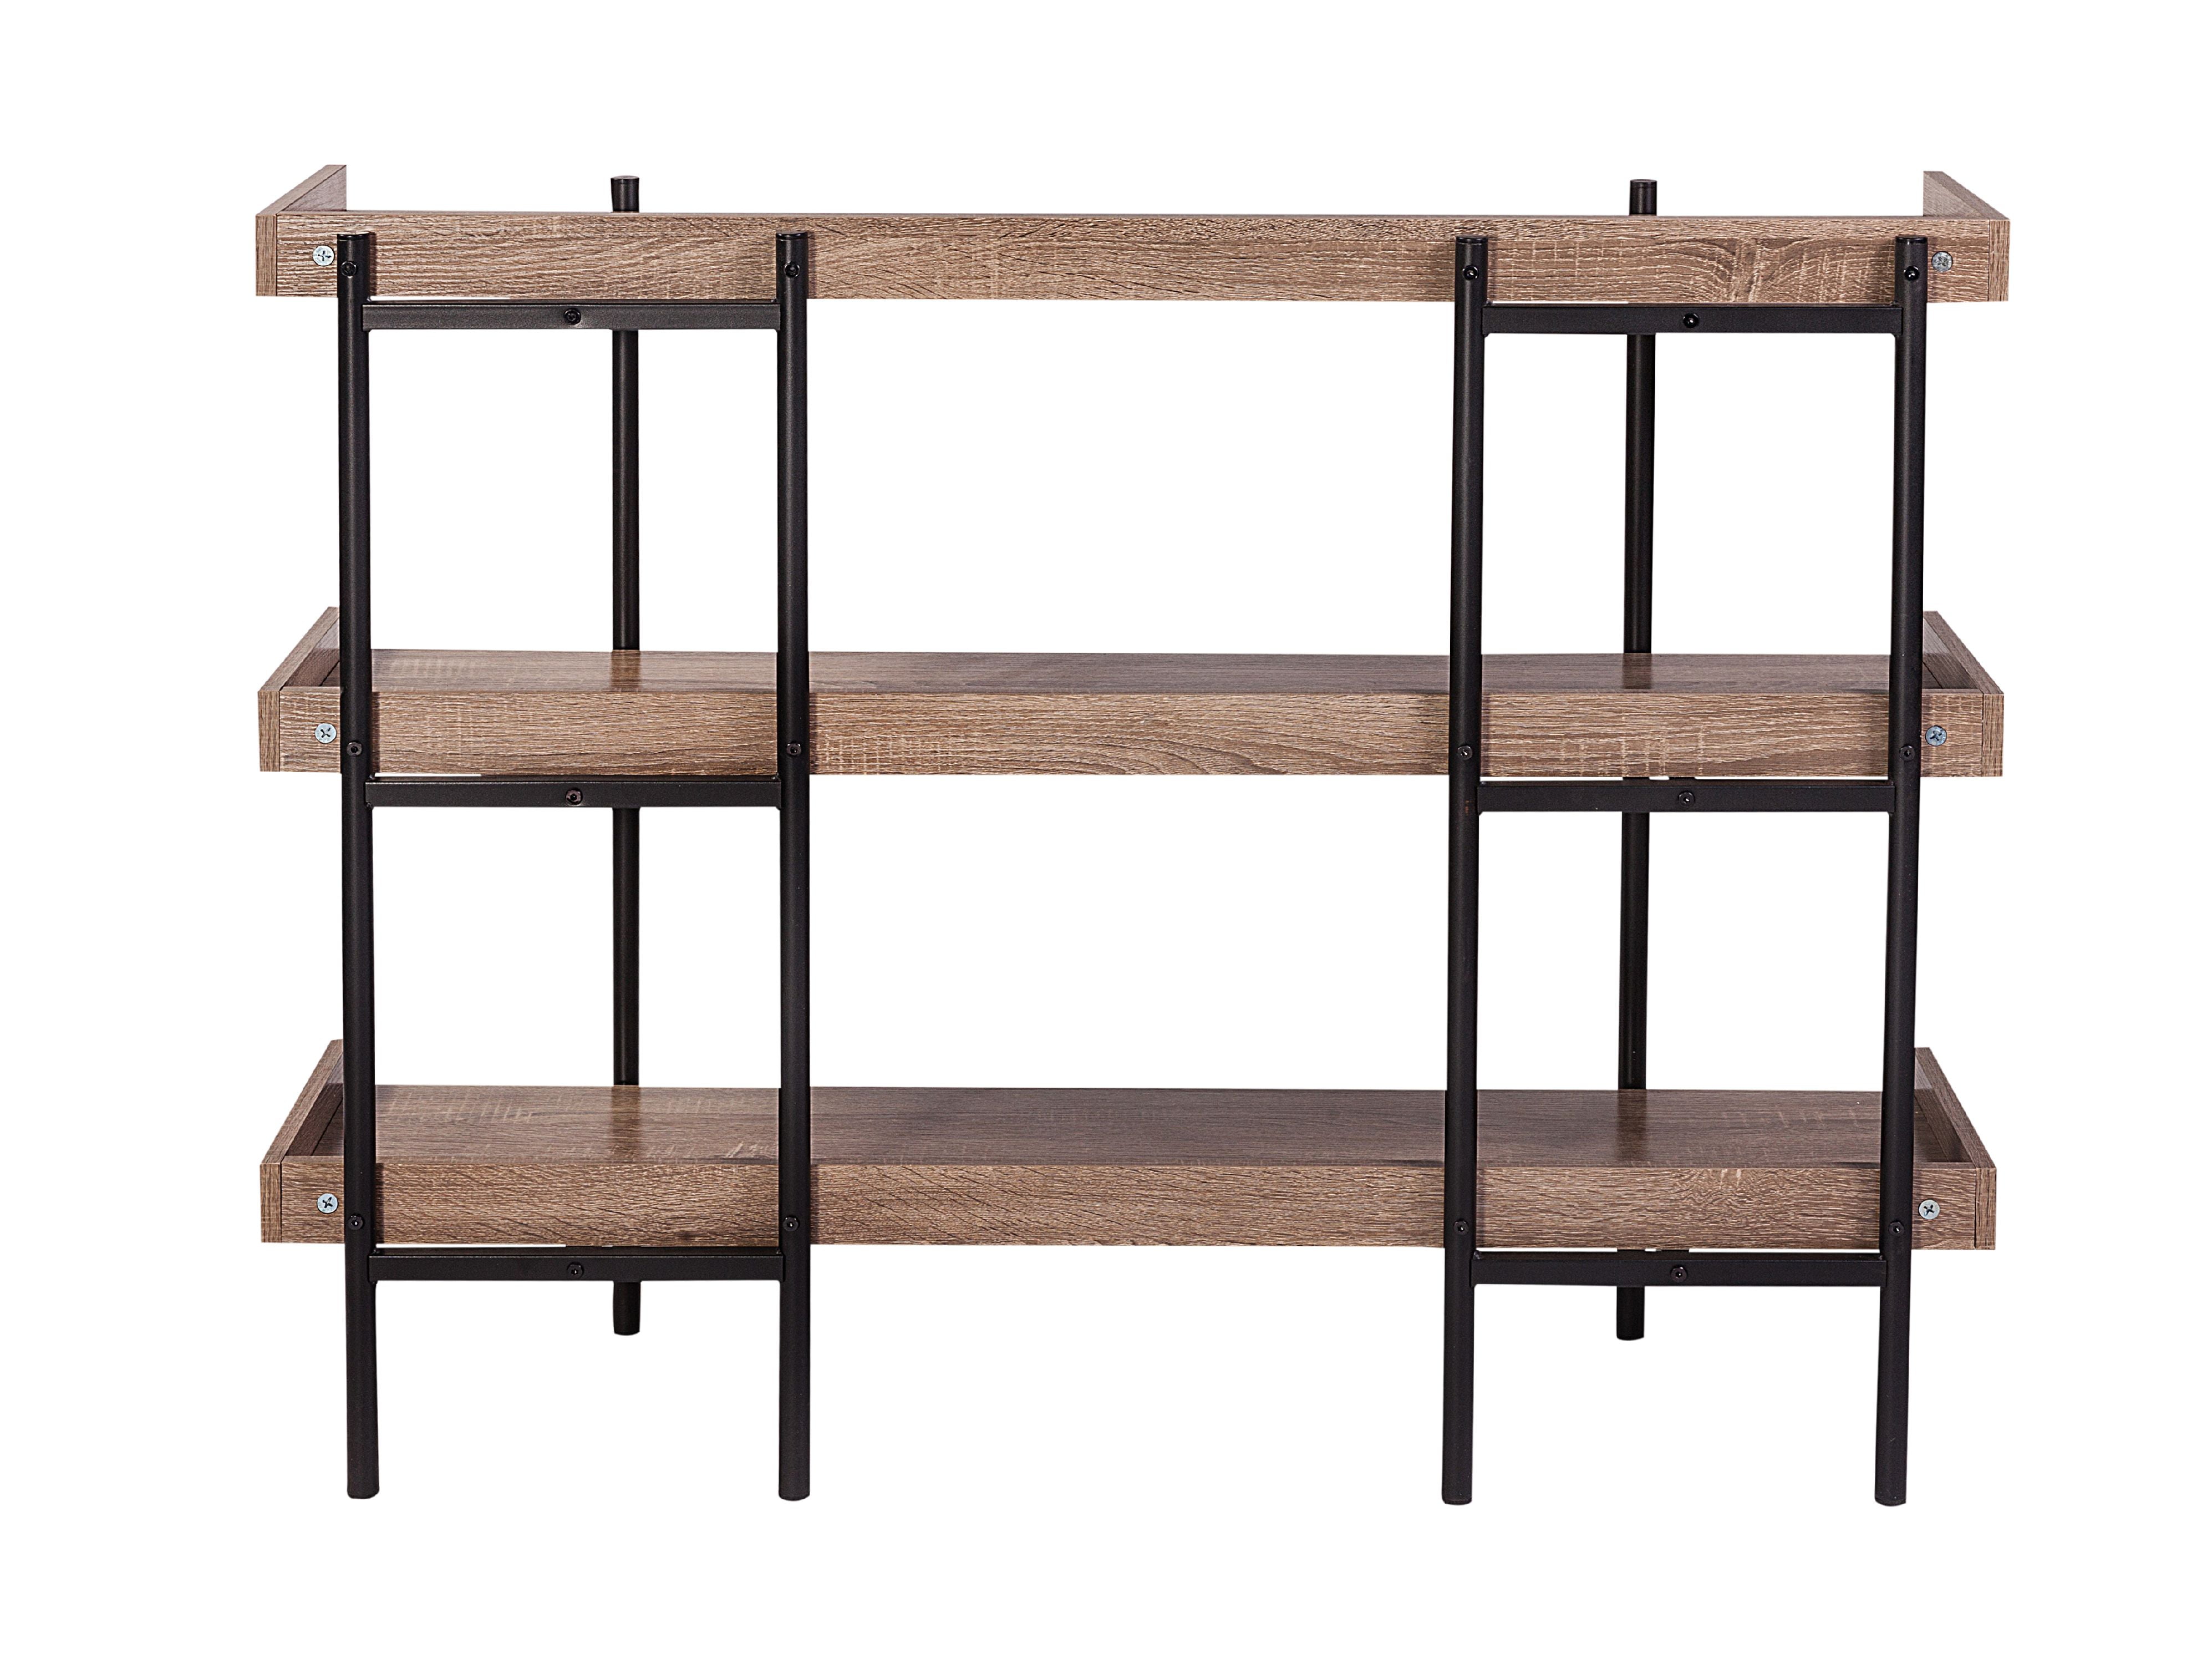  OneSpace Modern Wood and Steel 3-Shelf Display, Cherry